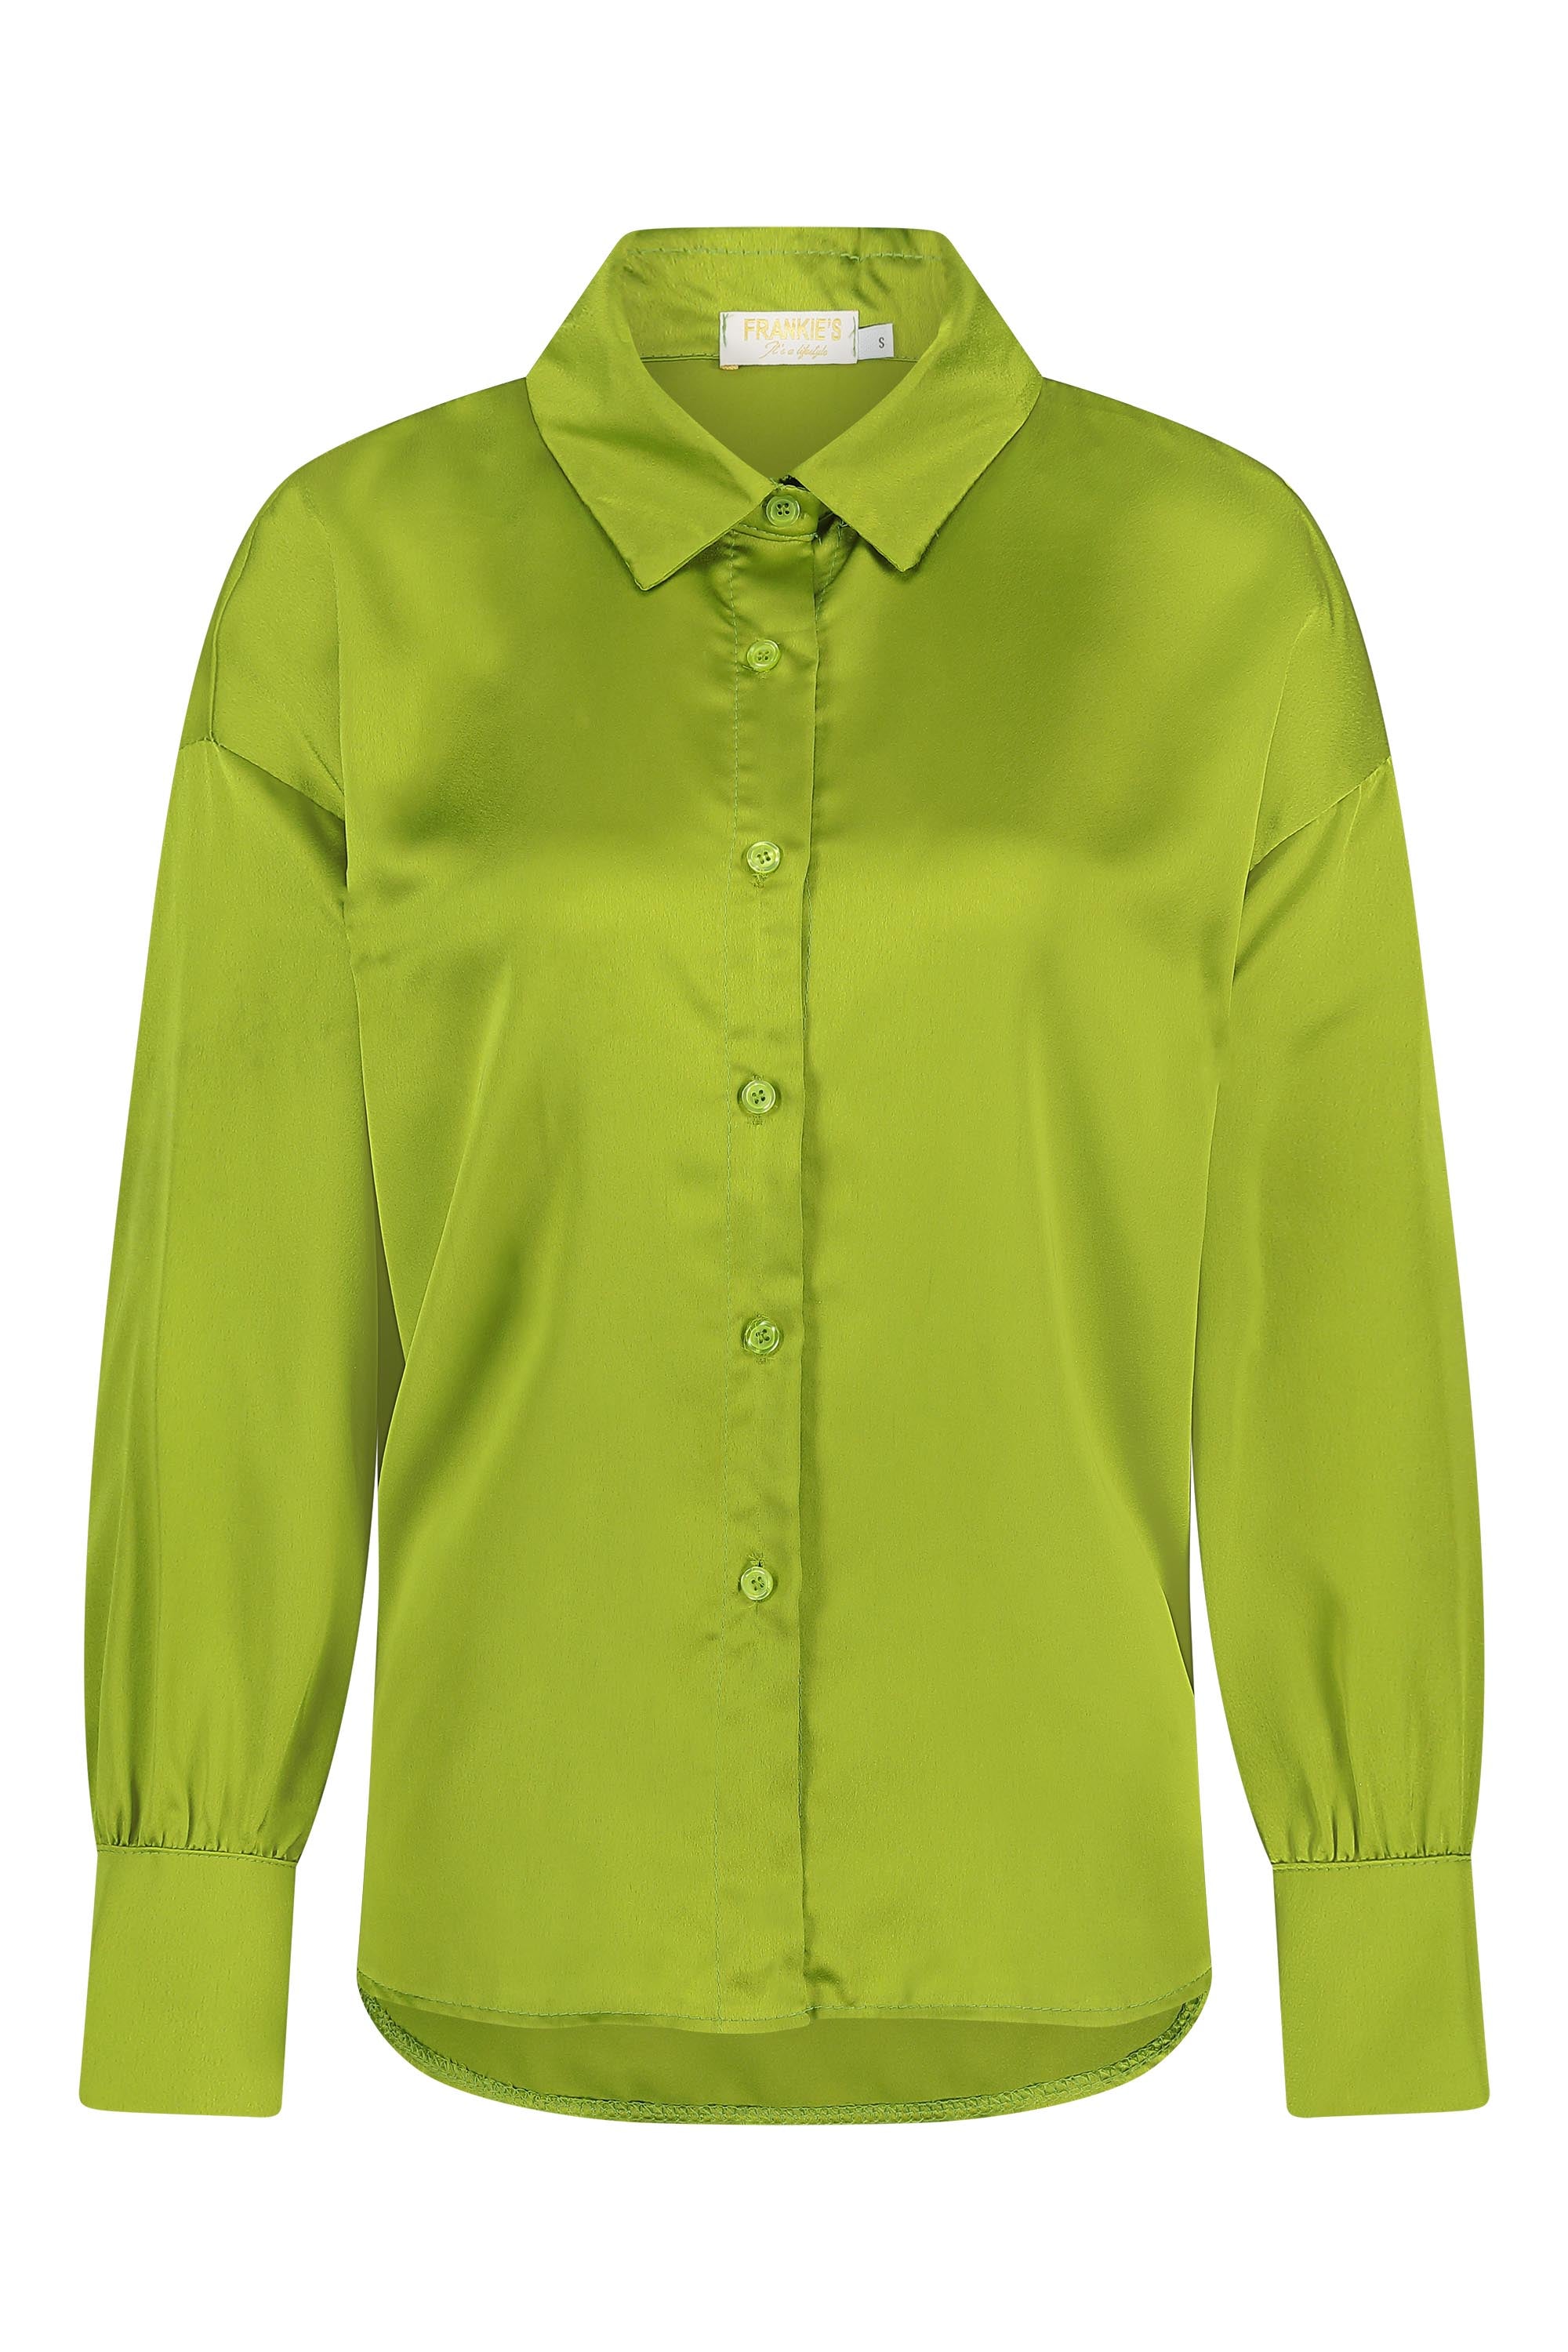 Satin blouse olive green